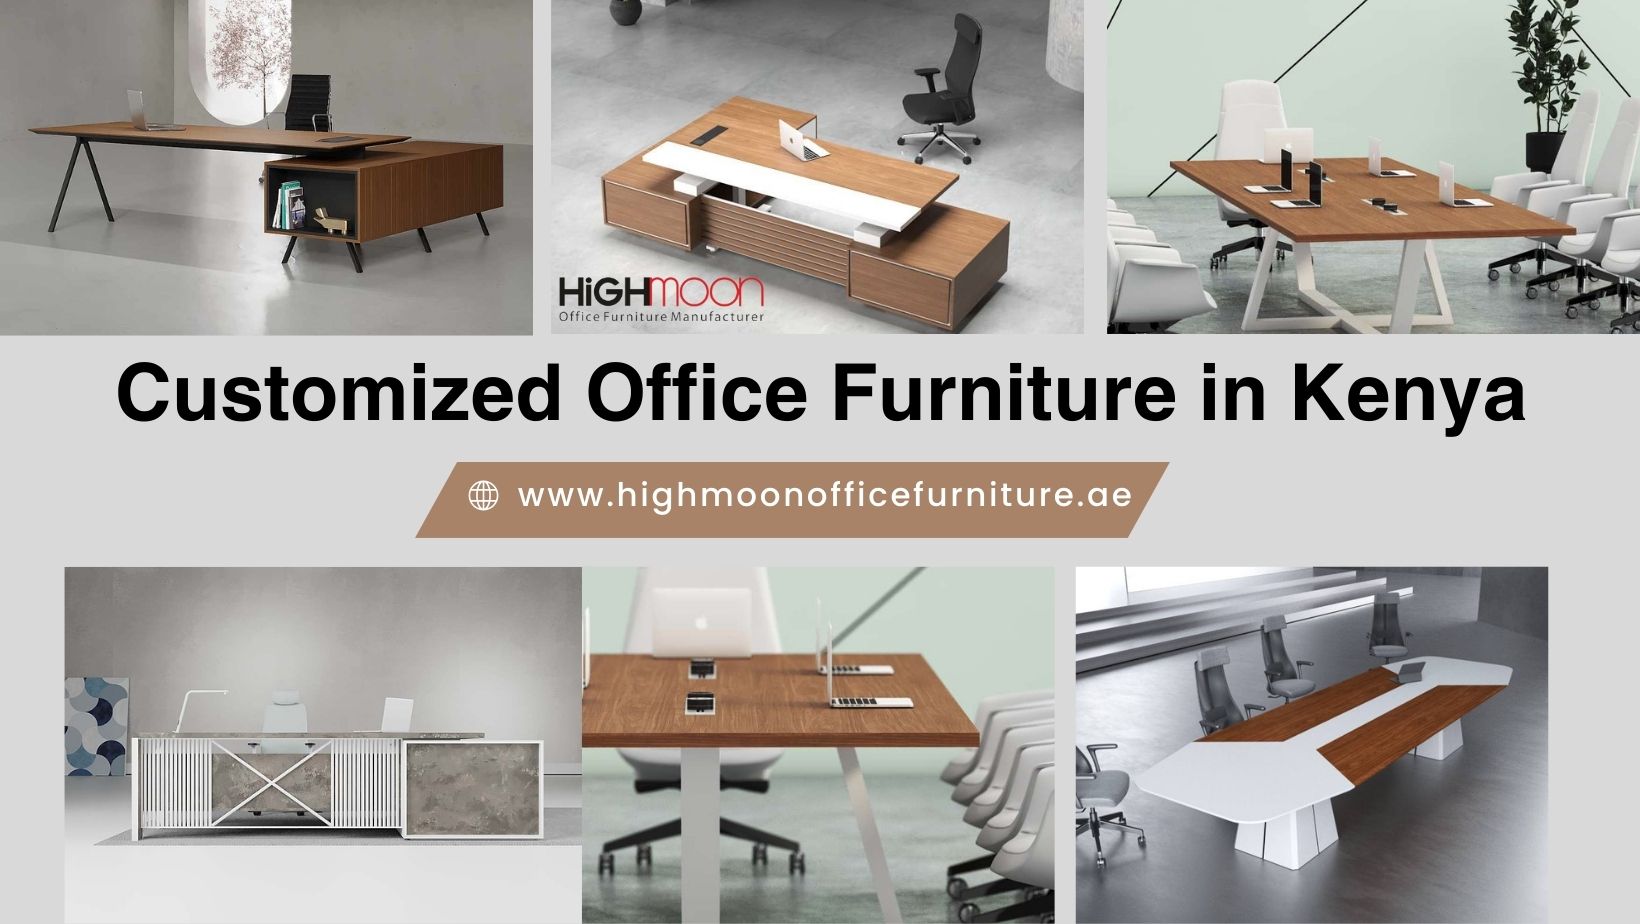 Customized Office Furniture in Kenya – Office Furniture Manufacturers